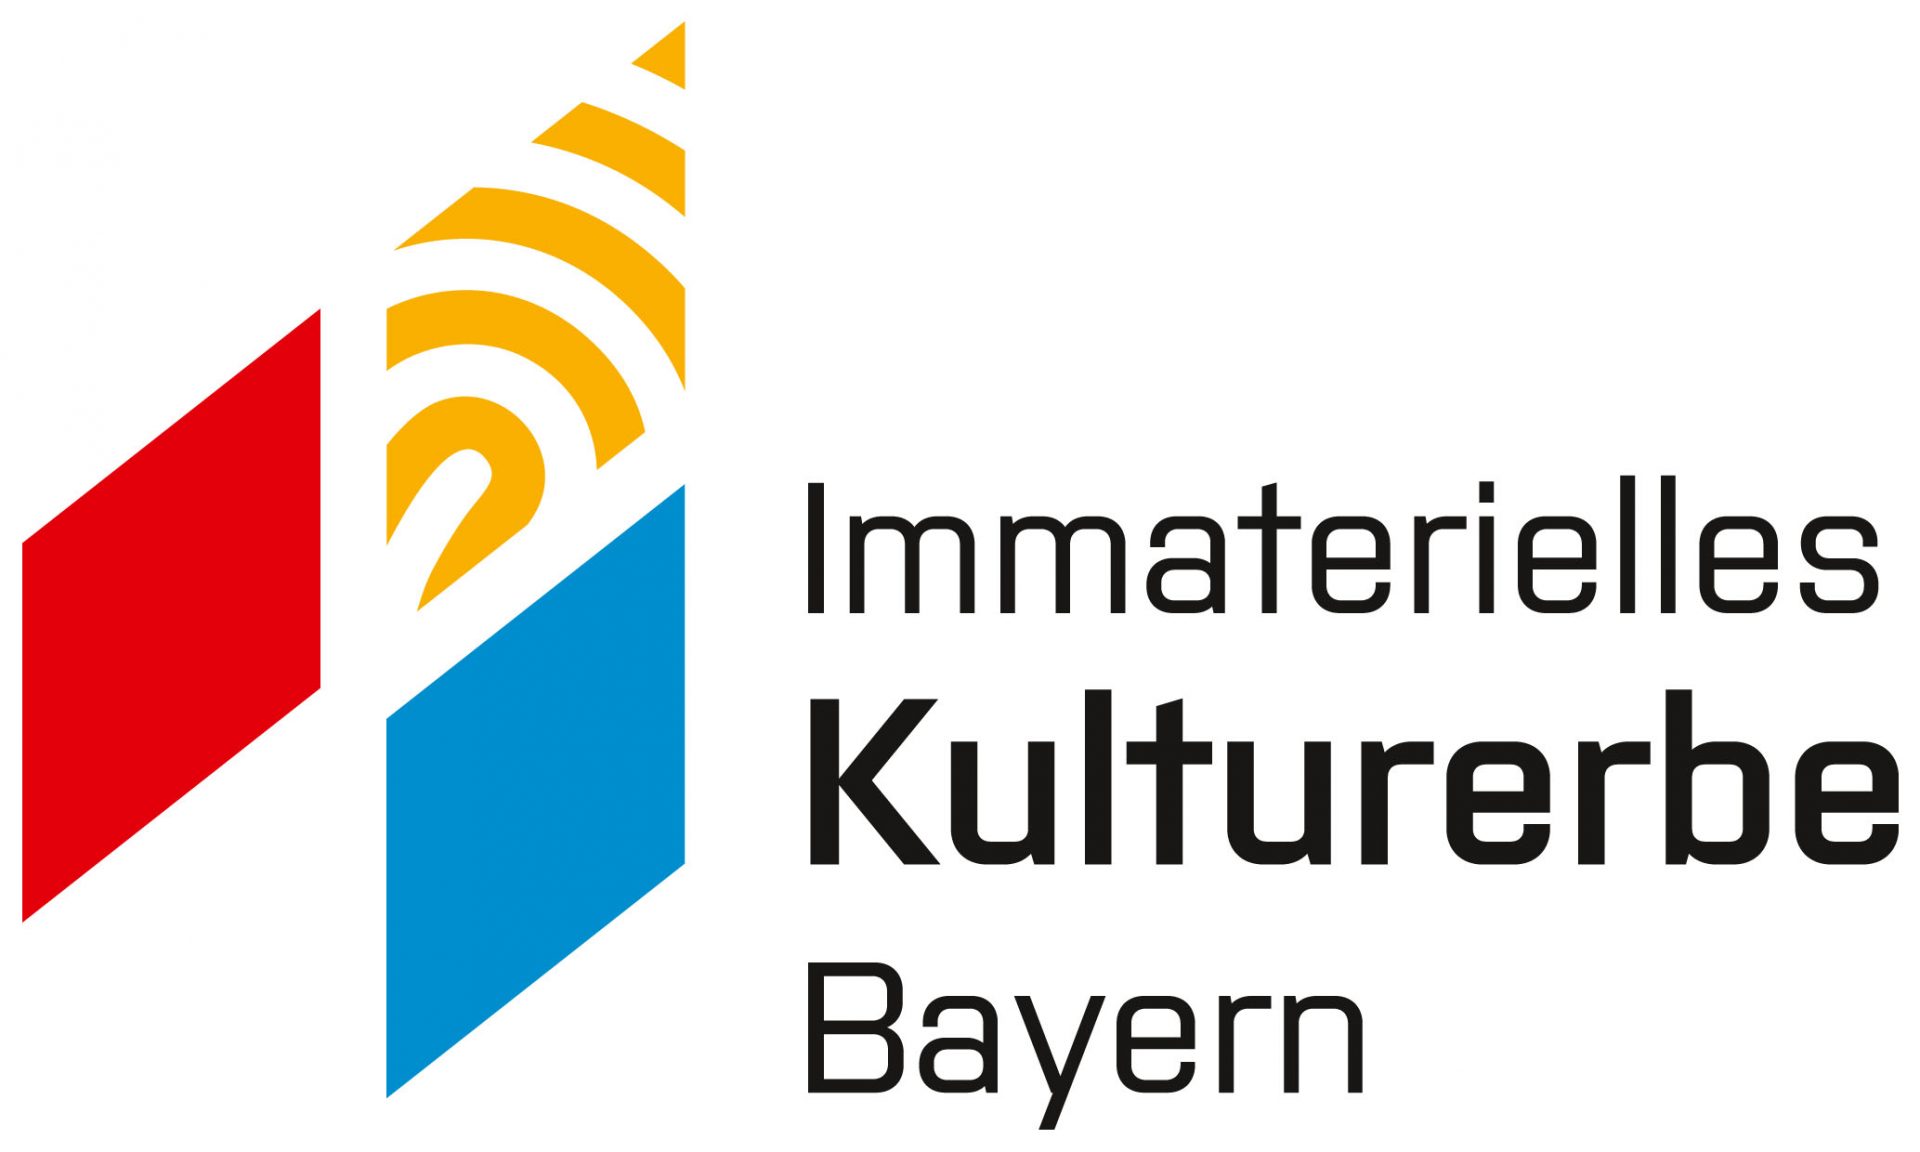 Immaterielles Kulturerbe Bayern